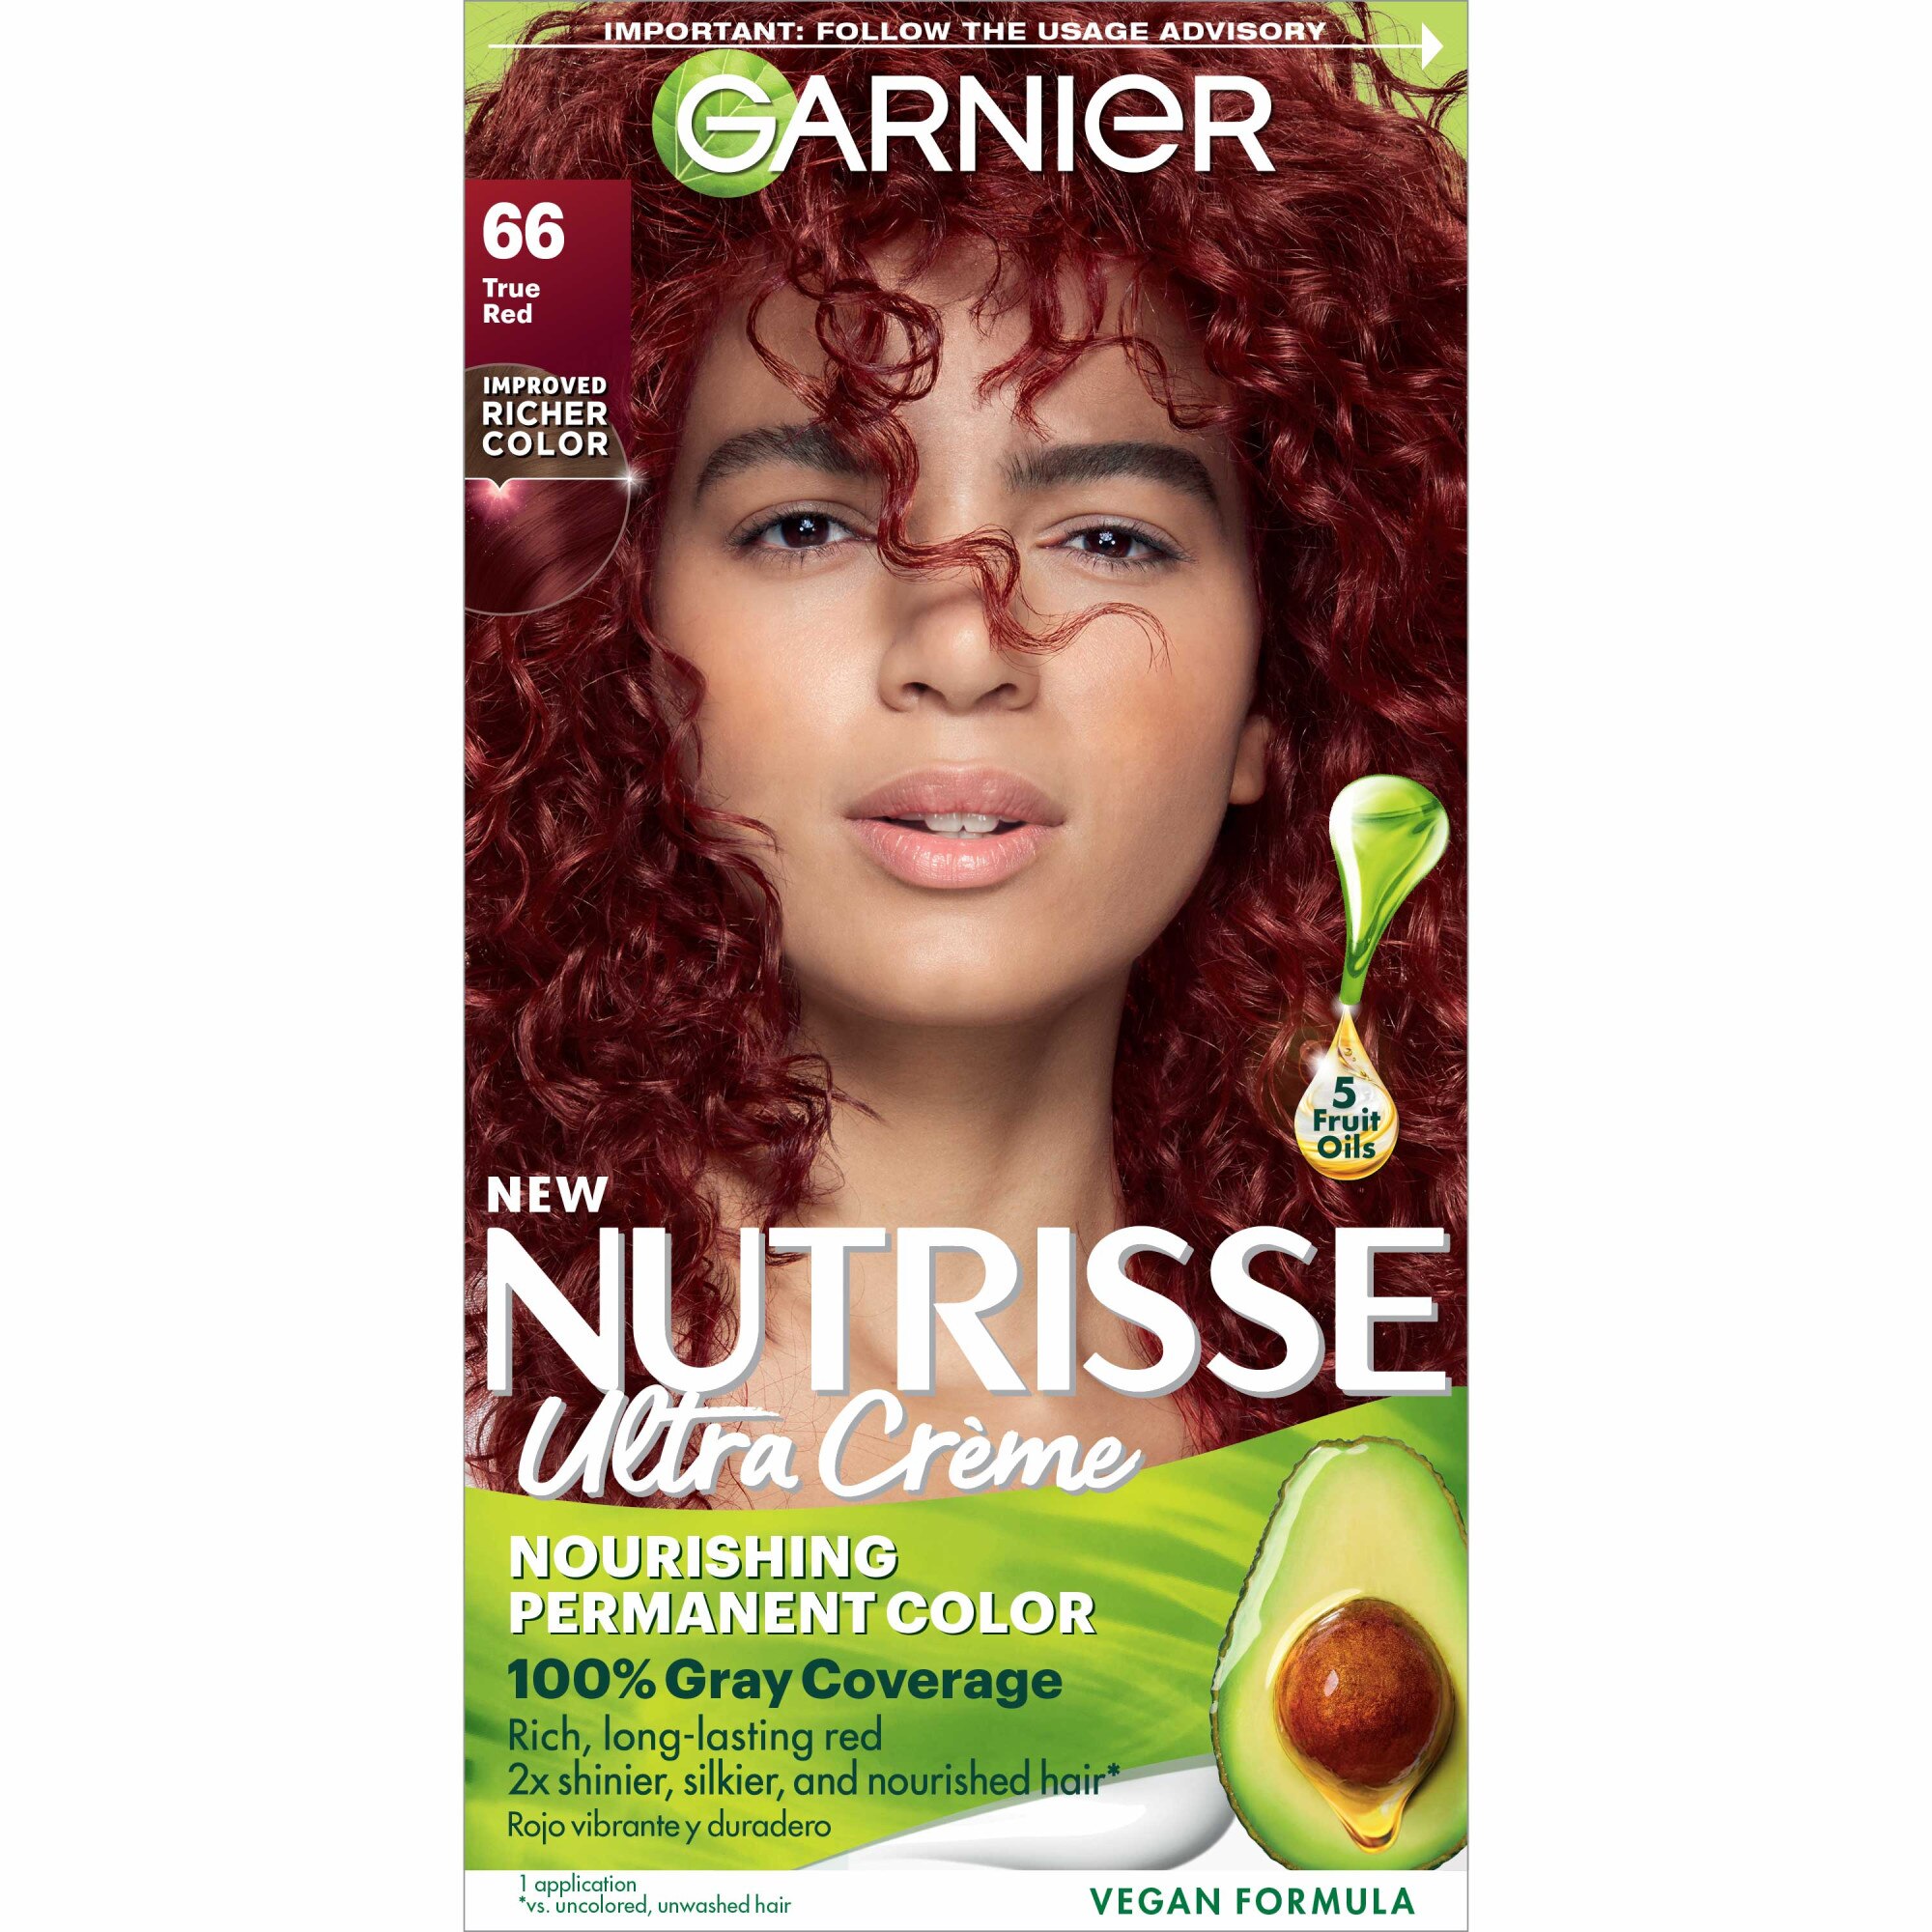 Garnier Nutrisse Nourishing Permanent Hair Color Creme, 66 True Red , CVS